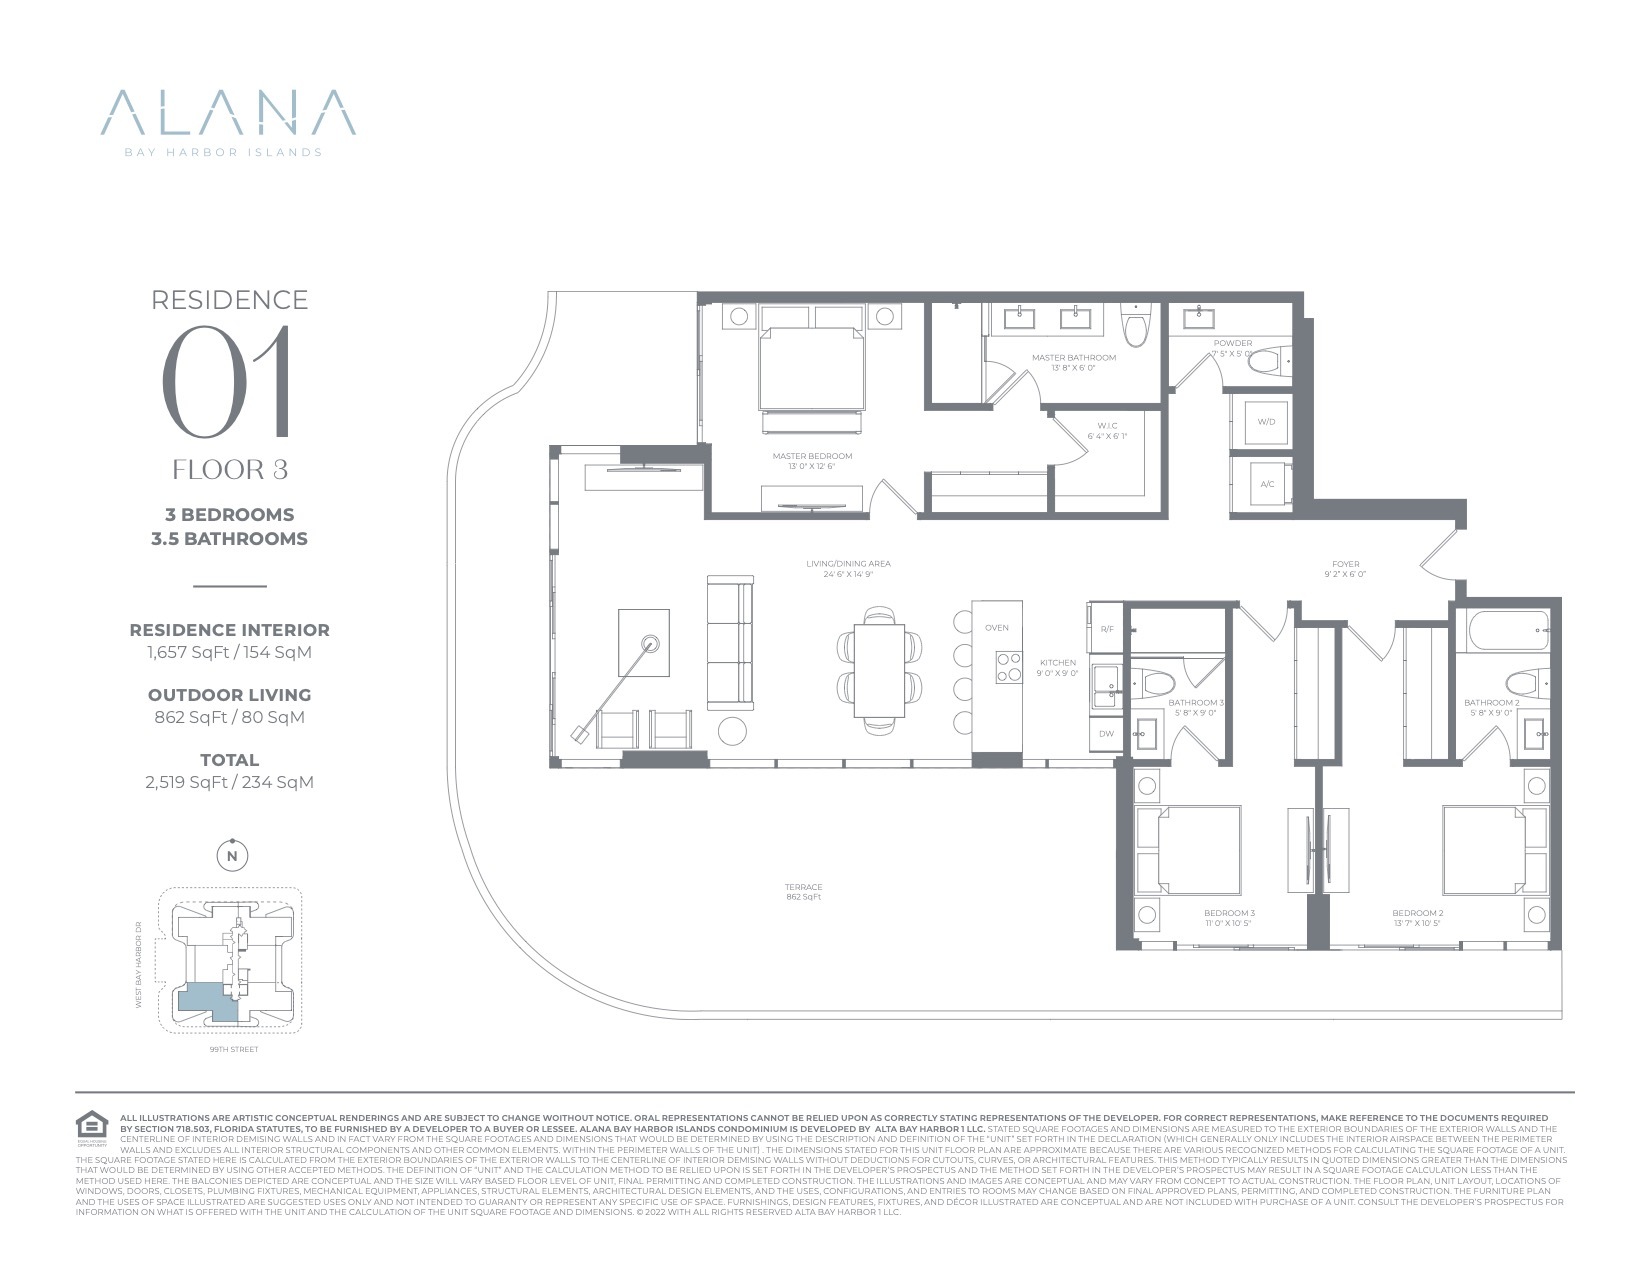 Floor Plan for Alana Bay Harbor Island Floorplans, Residence 01